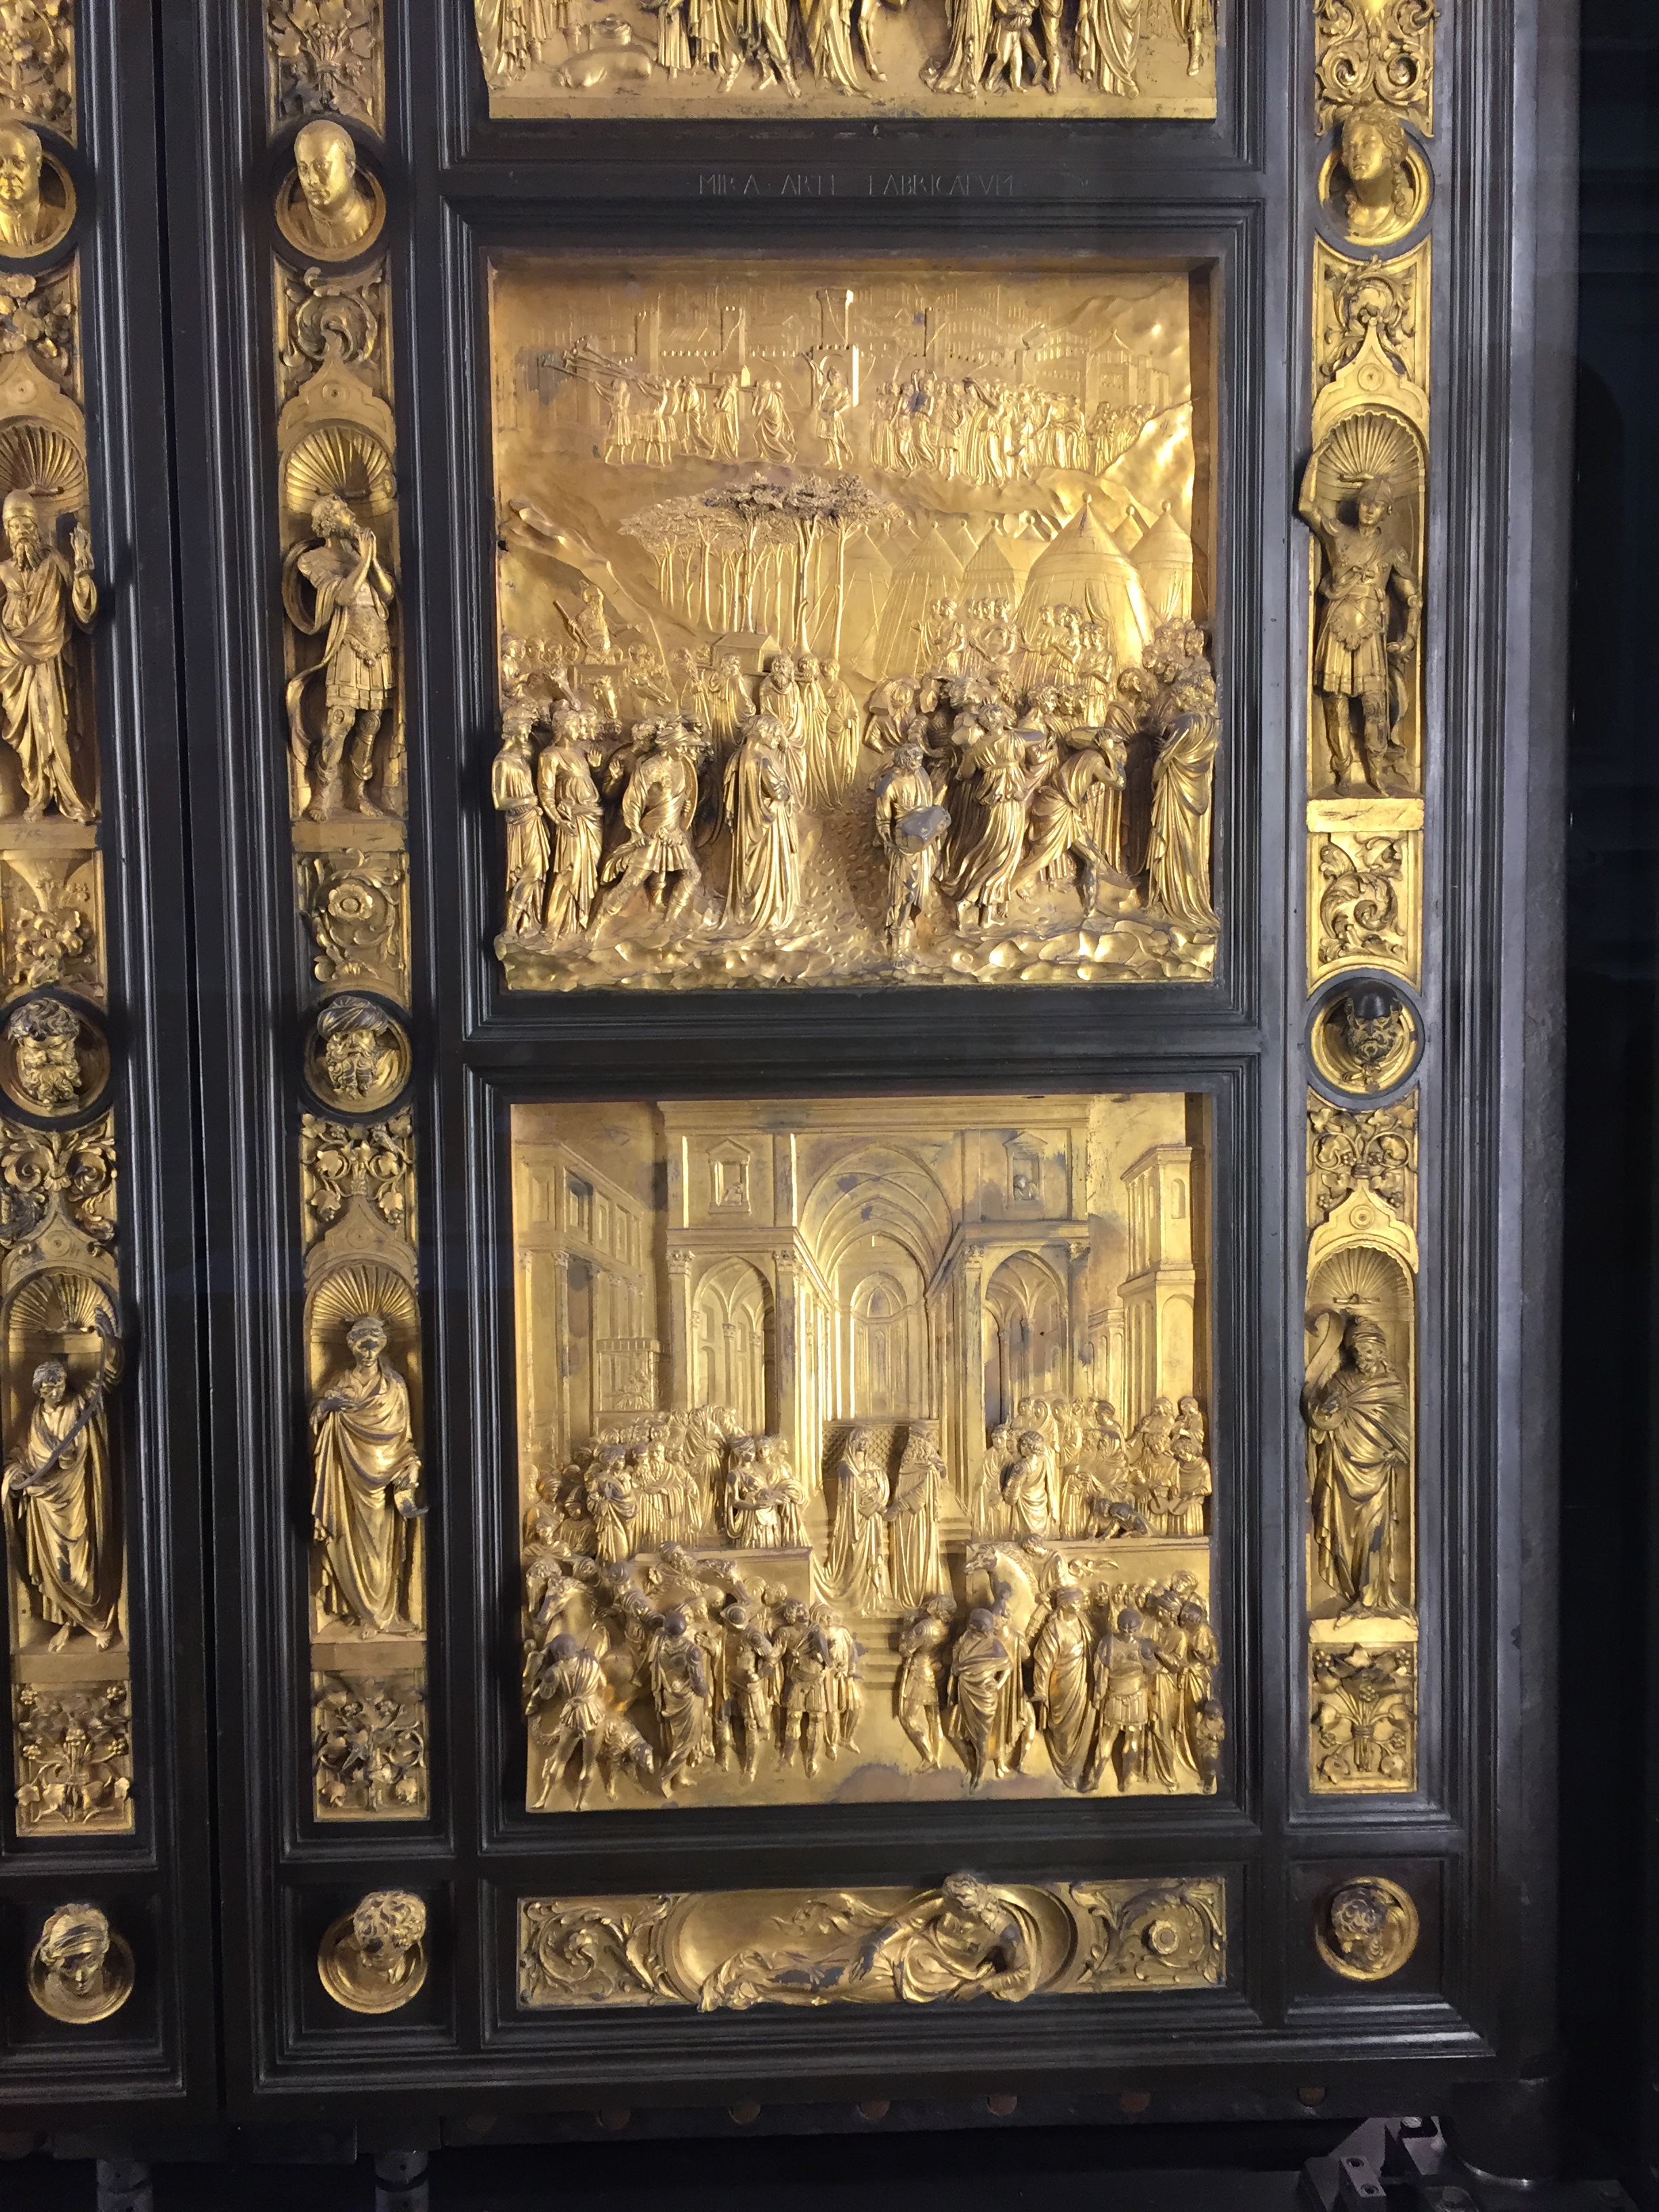 img 0843 - Visitando la Catedral Santa Maria del Fiore de Florencia I/III